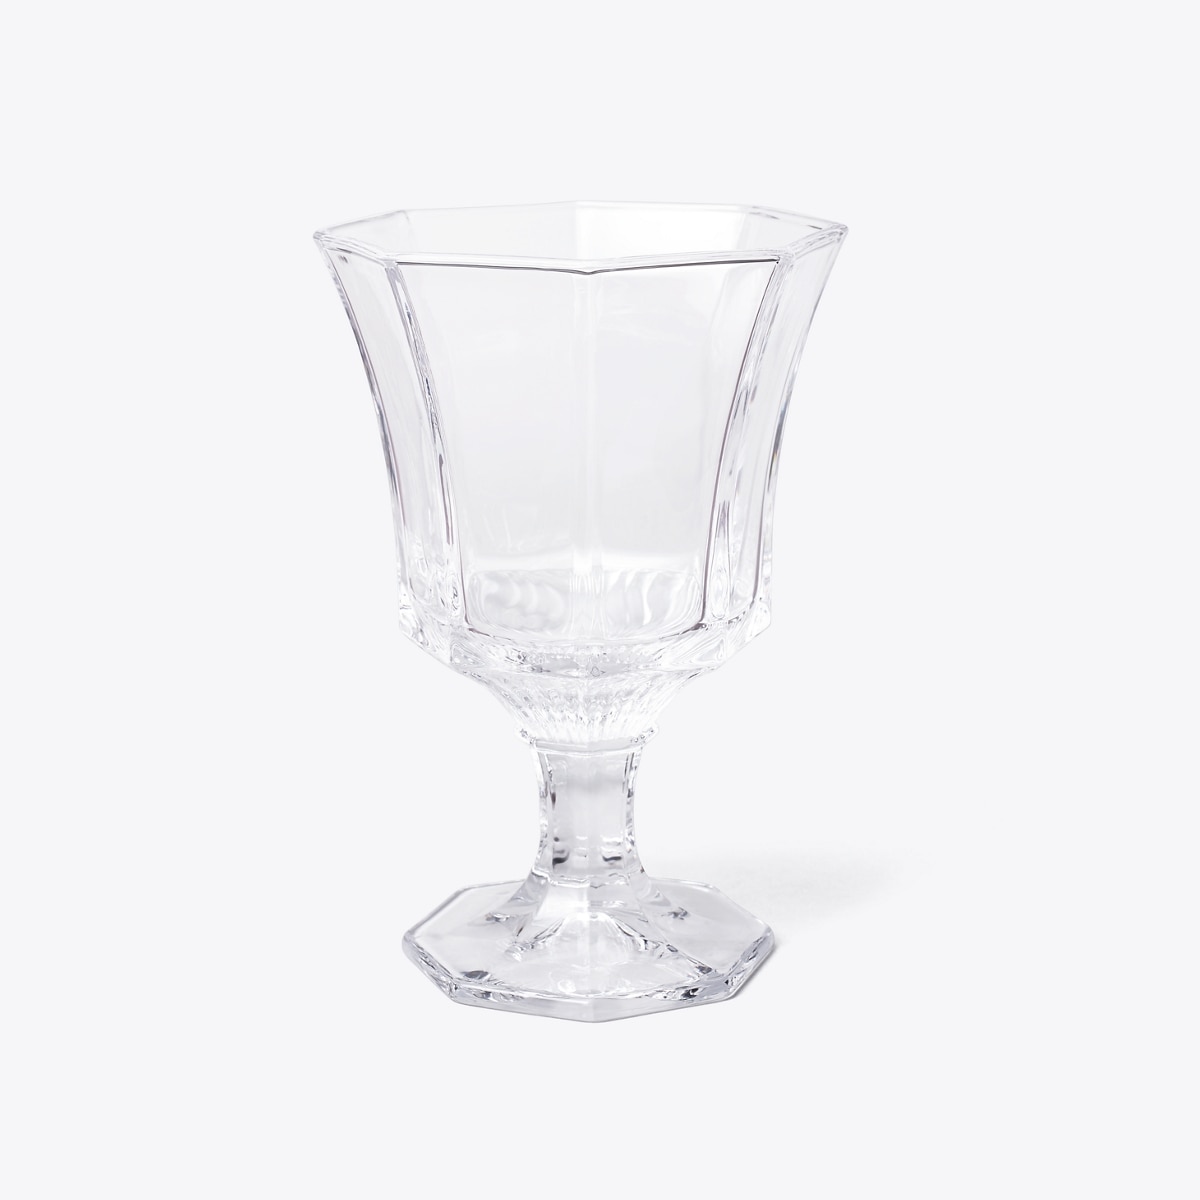 Pressed-Glass Water Glass, Set of 4: Women's Designer Tabletop